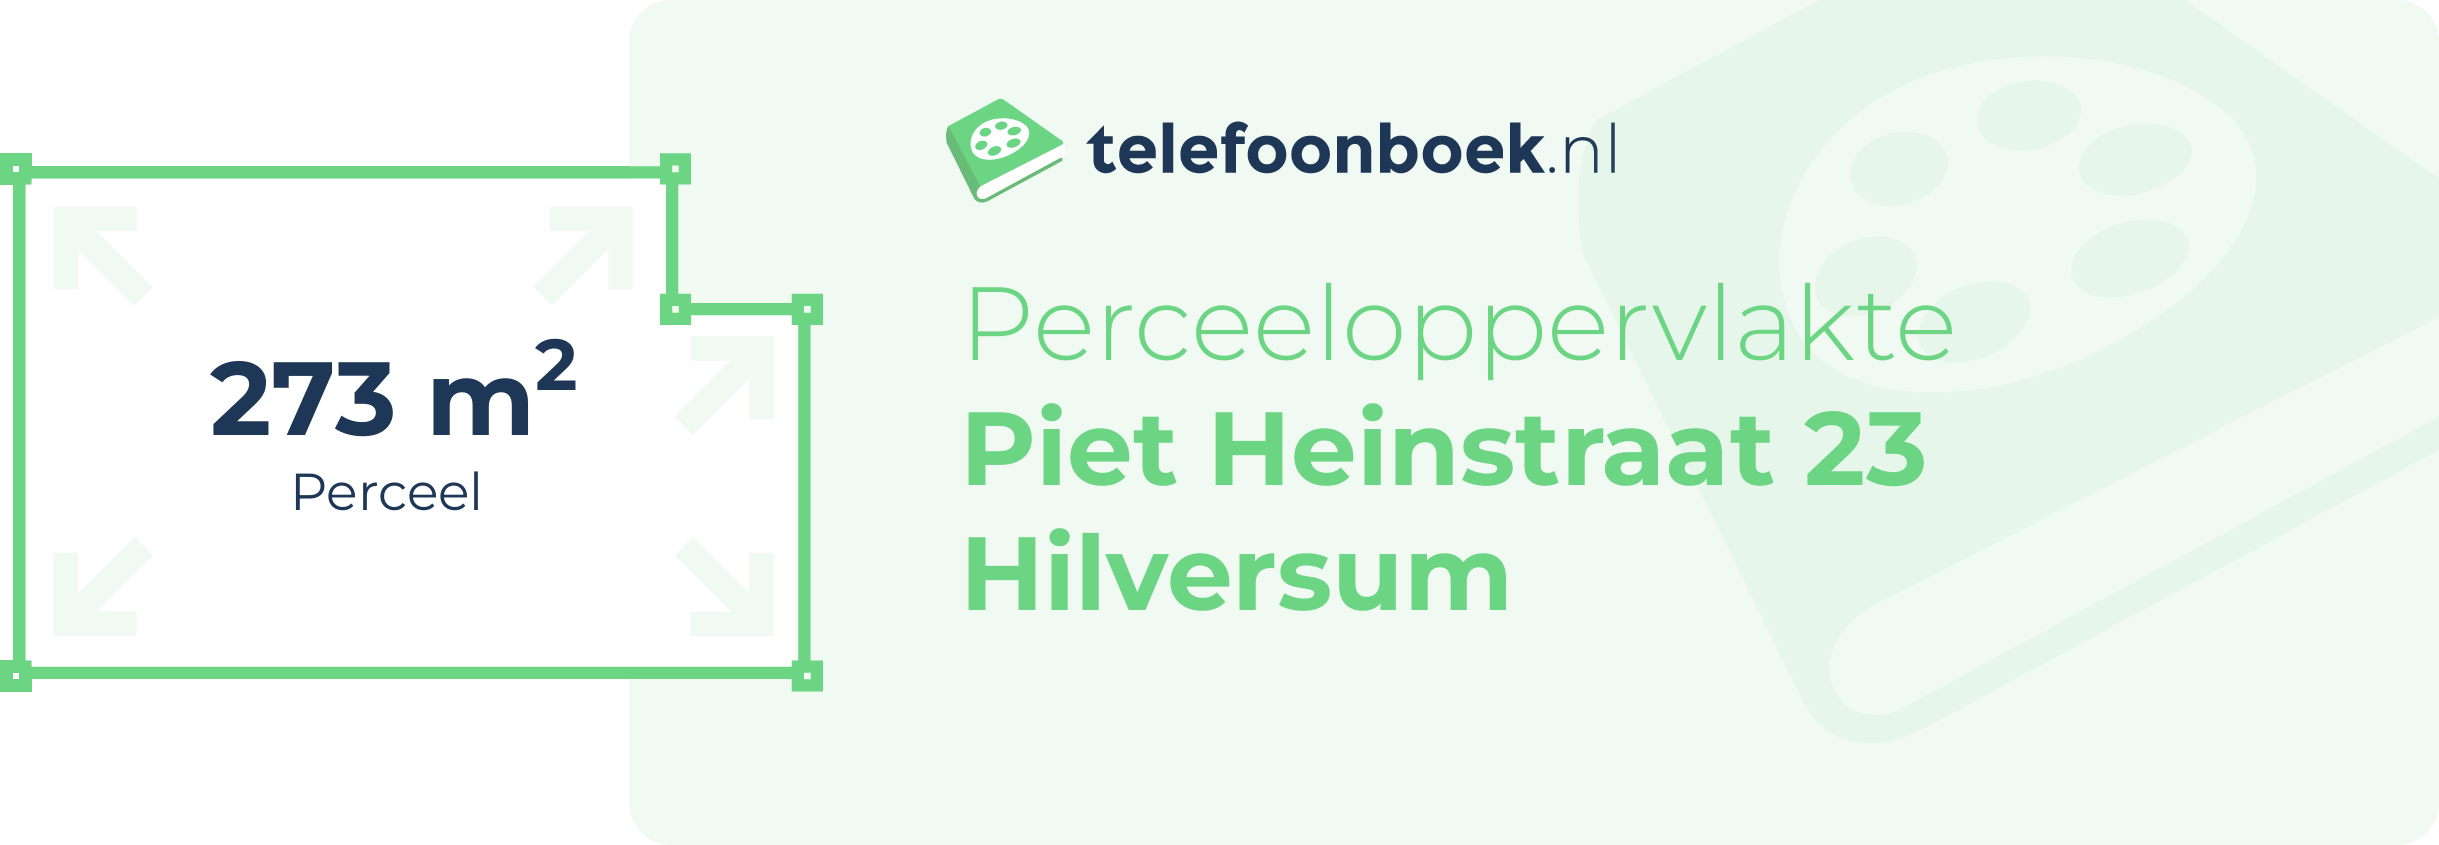 Perceeloppervlakte Piet Heinstraat 23 Hilversum